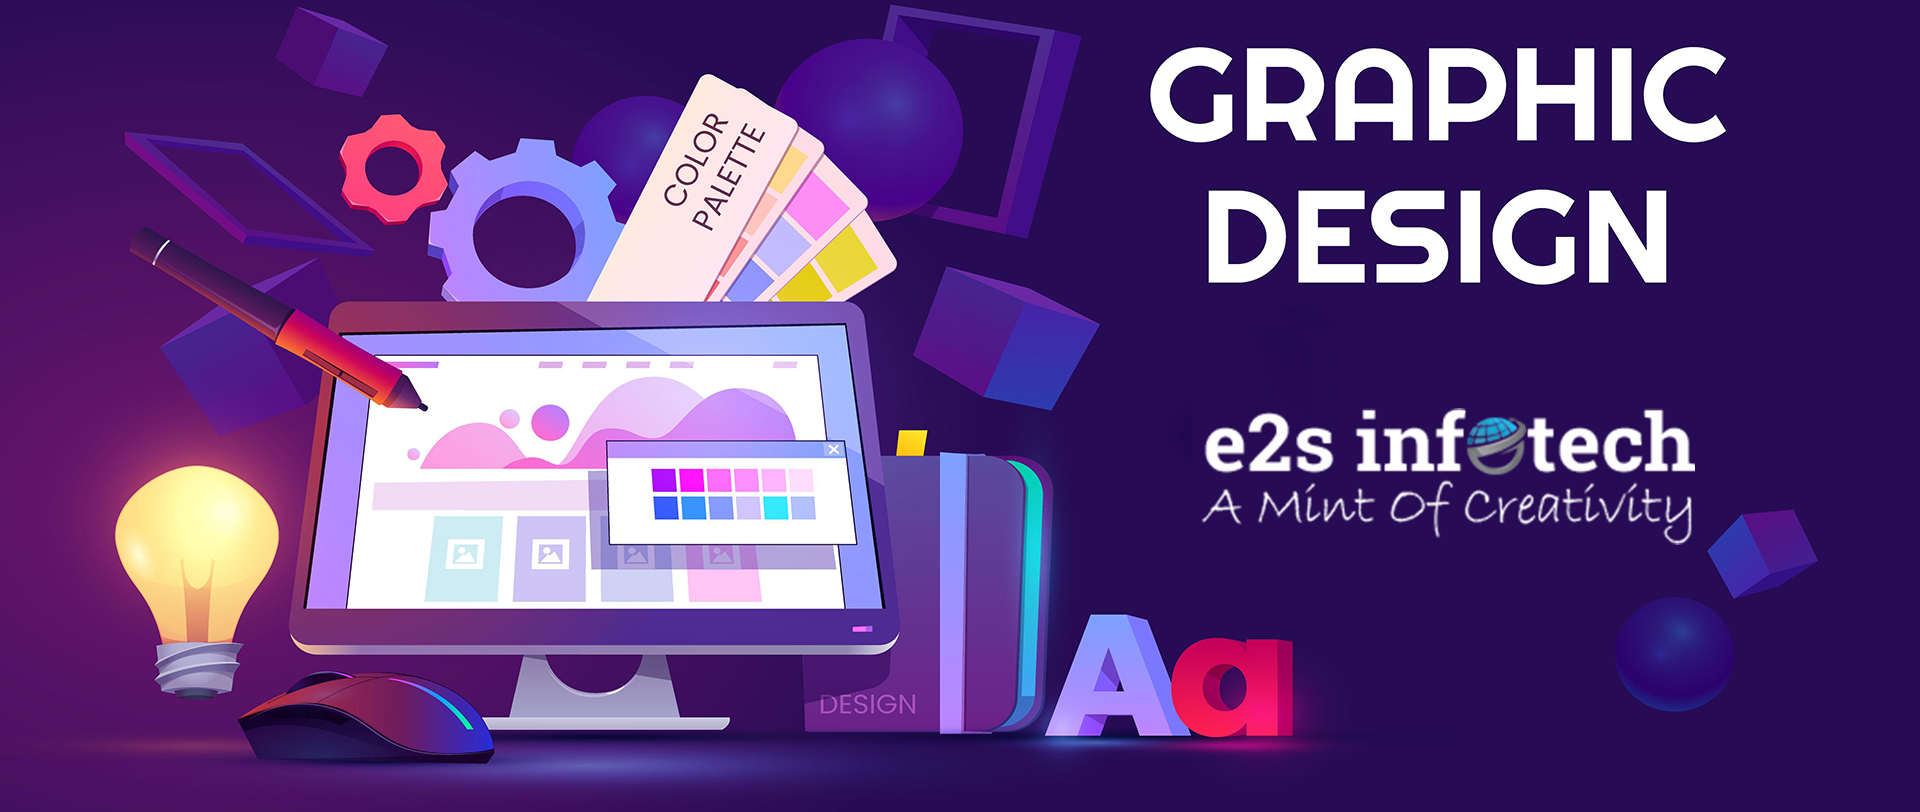 graphic design services e2s infotech